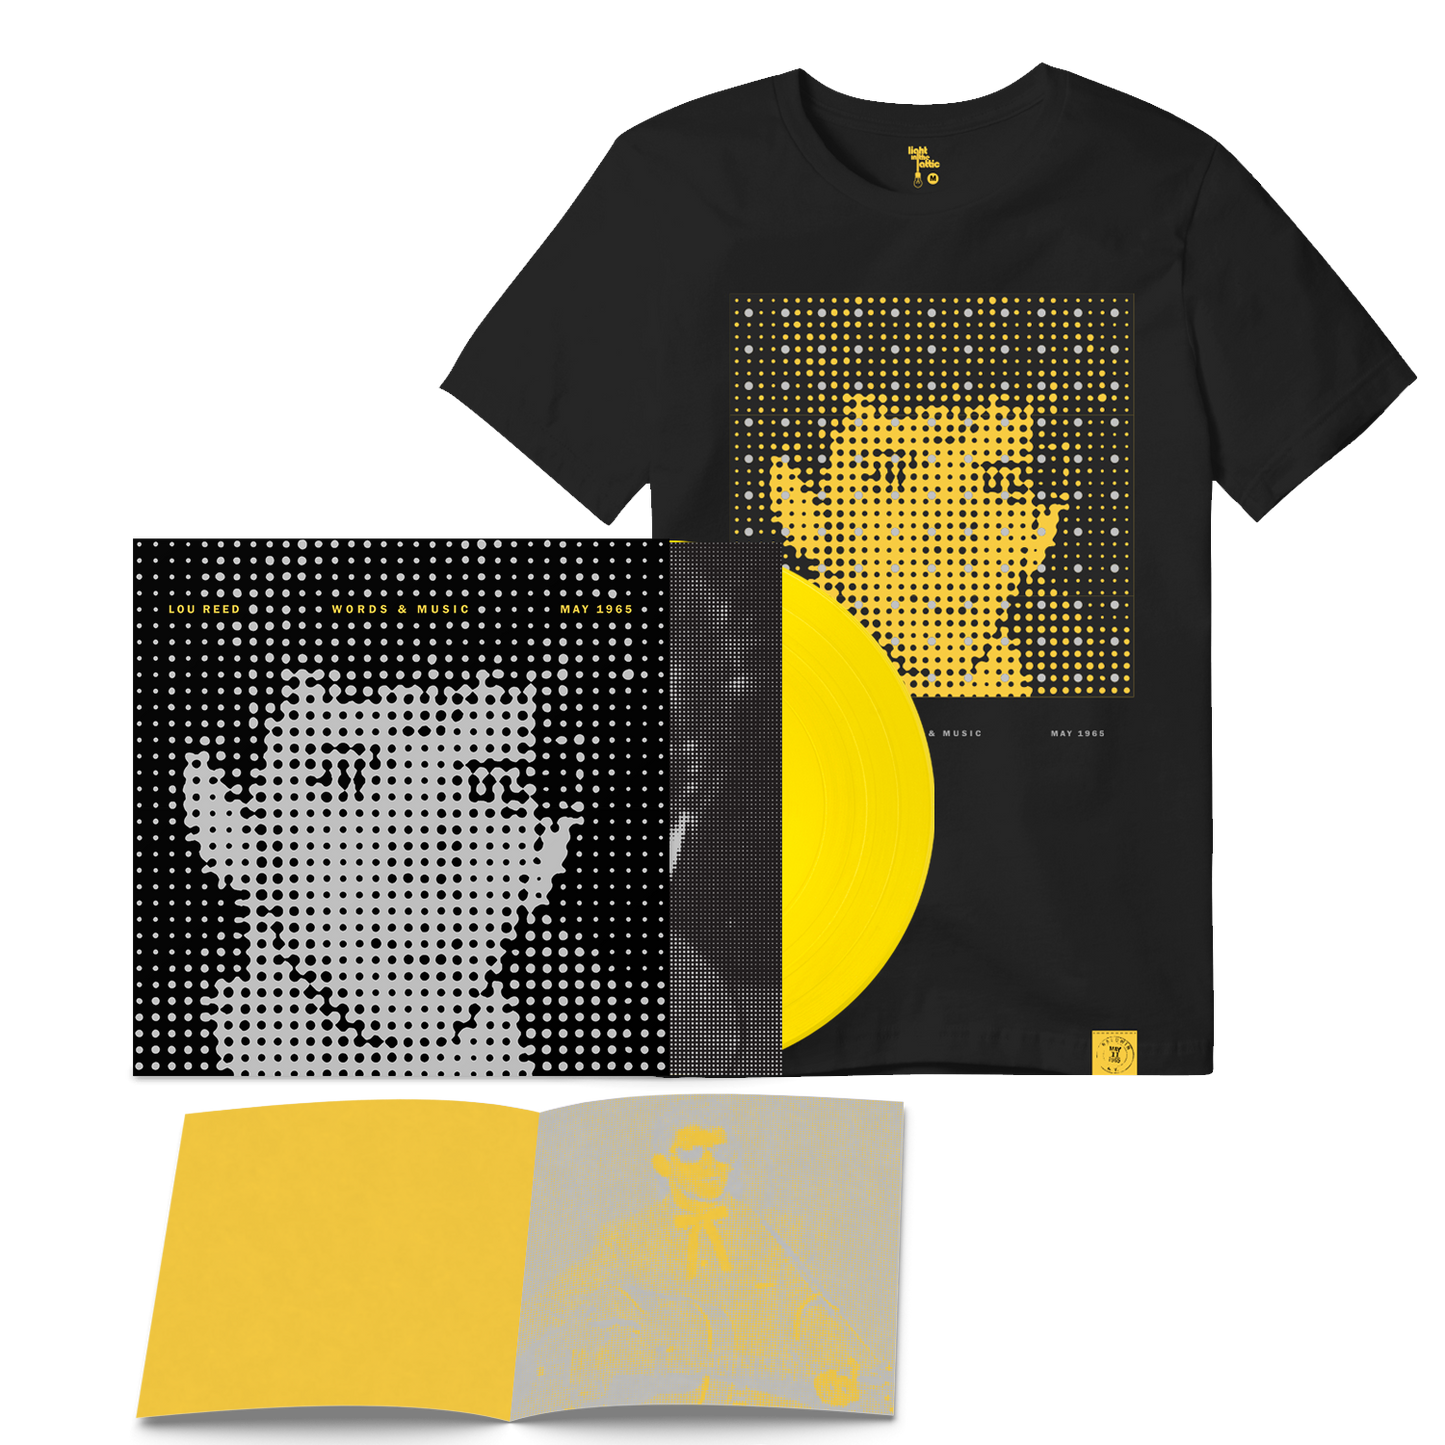 Words & Music, May 1965 -  T-Shirt + Standard Bright Yellow LP Bundle